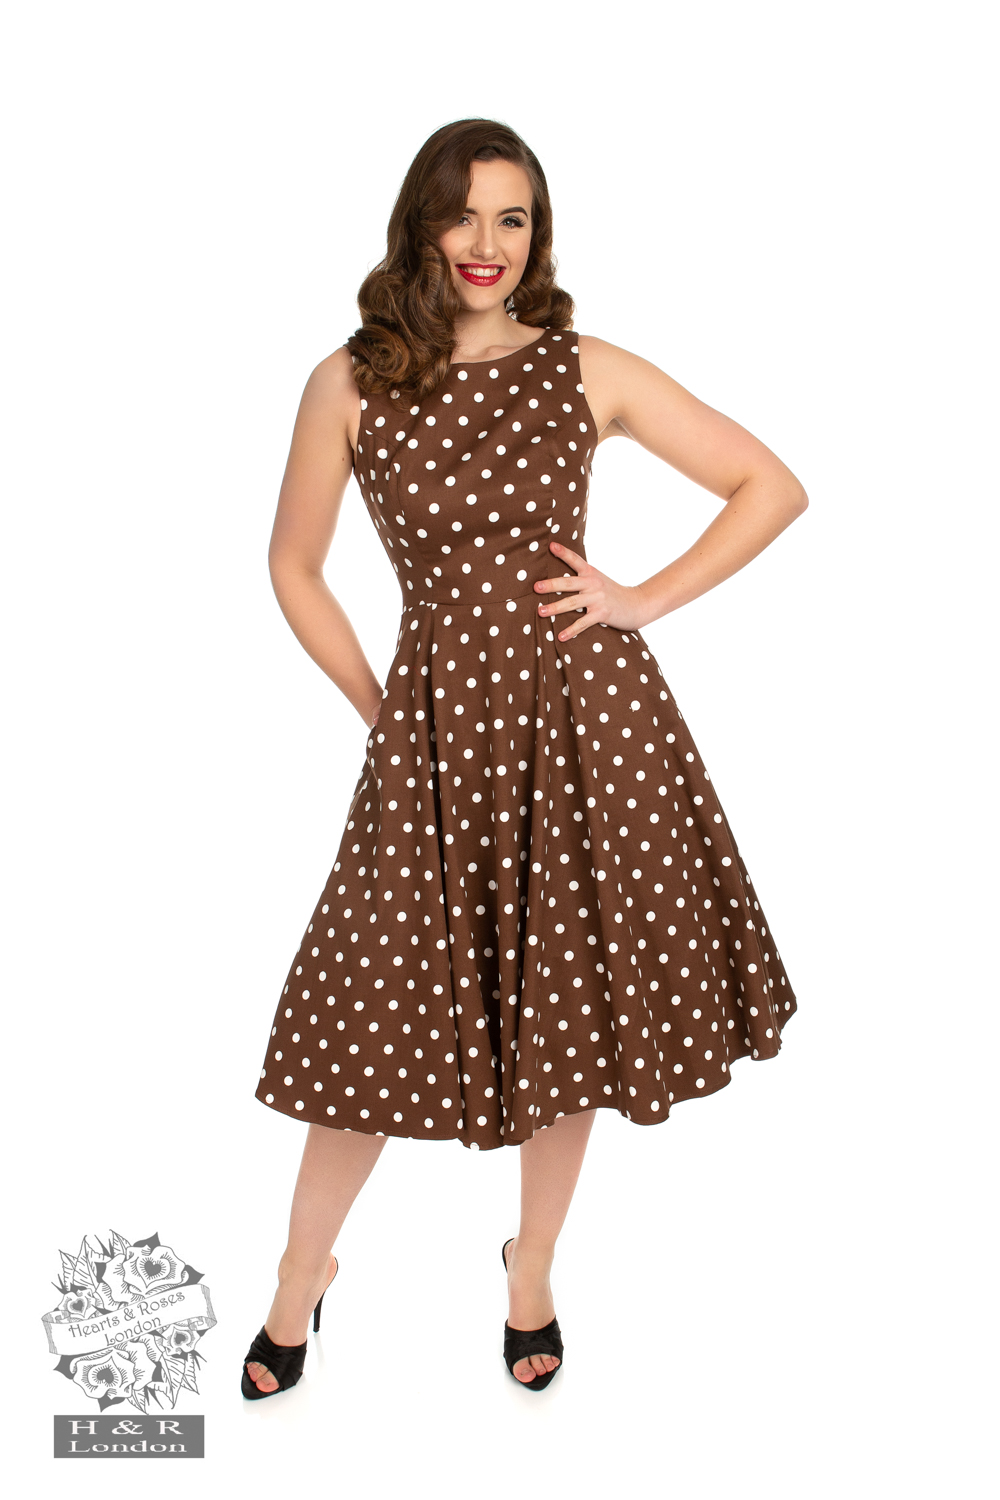 Cindy Polka Dot Swing Dress in Chocolate Brown